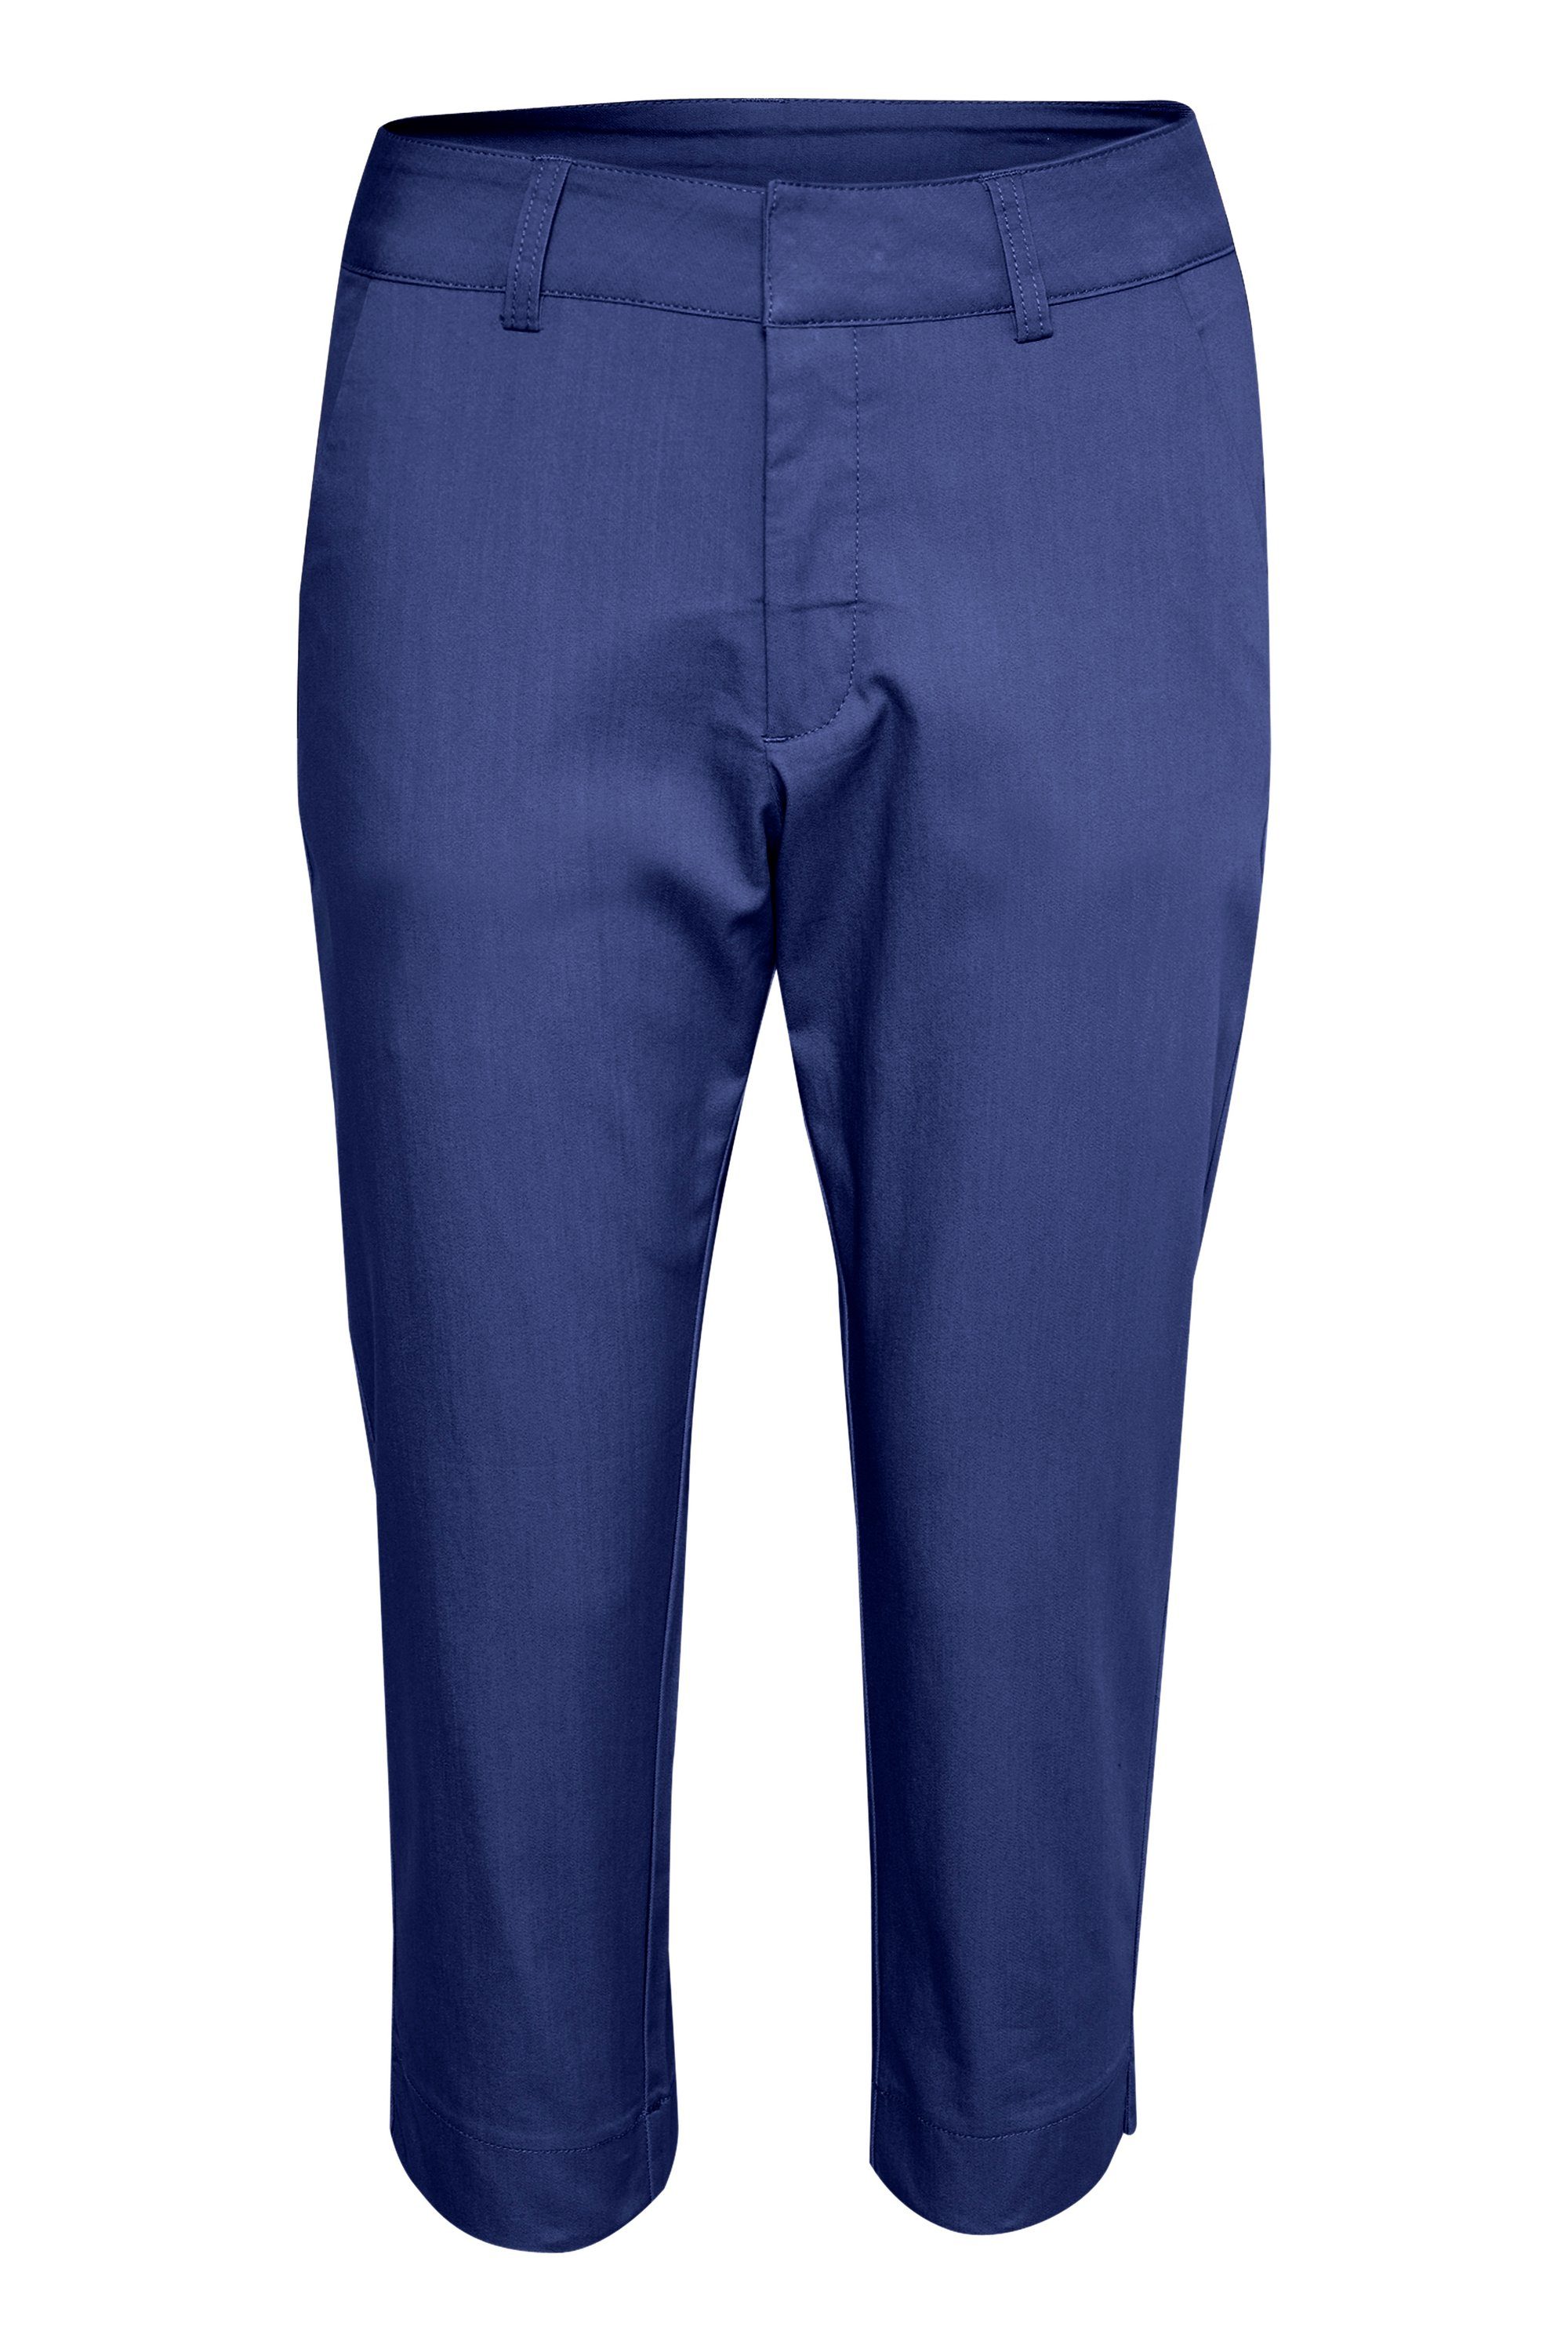 offiziell KAFFE Anzughose Suiting Pants Indigo KAlea Vintage